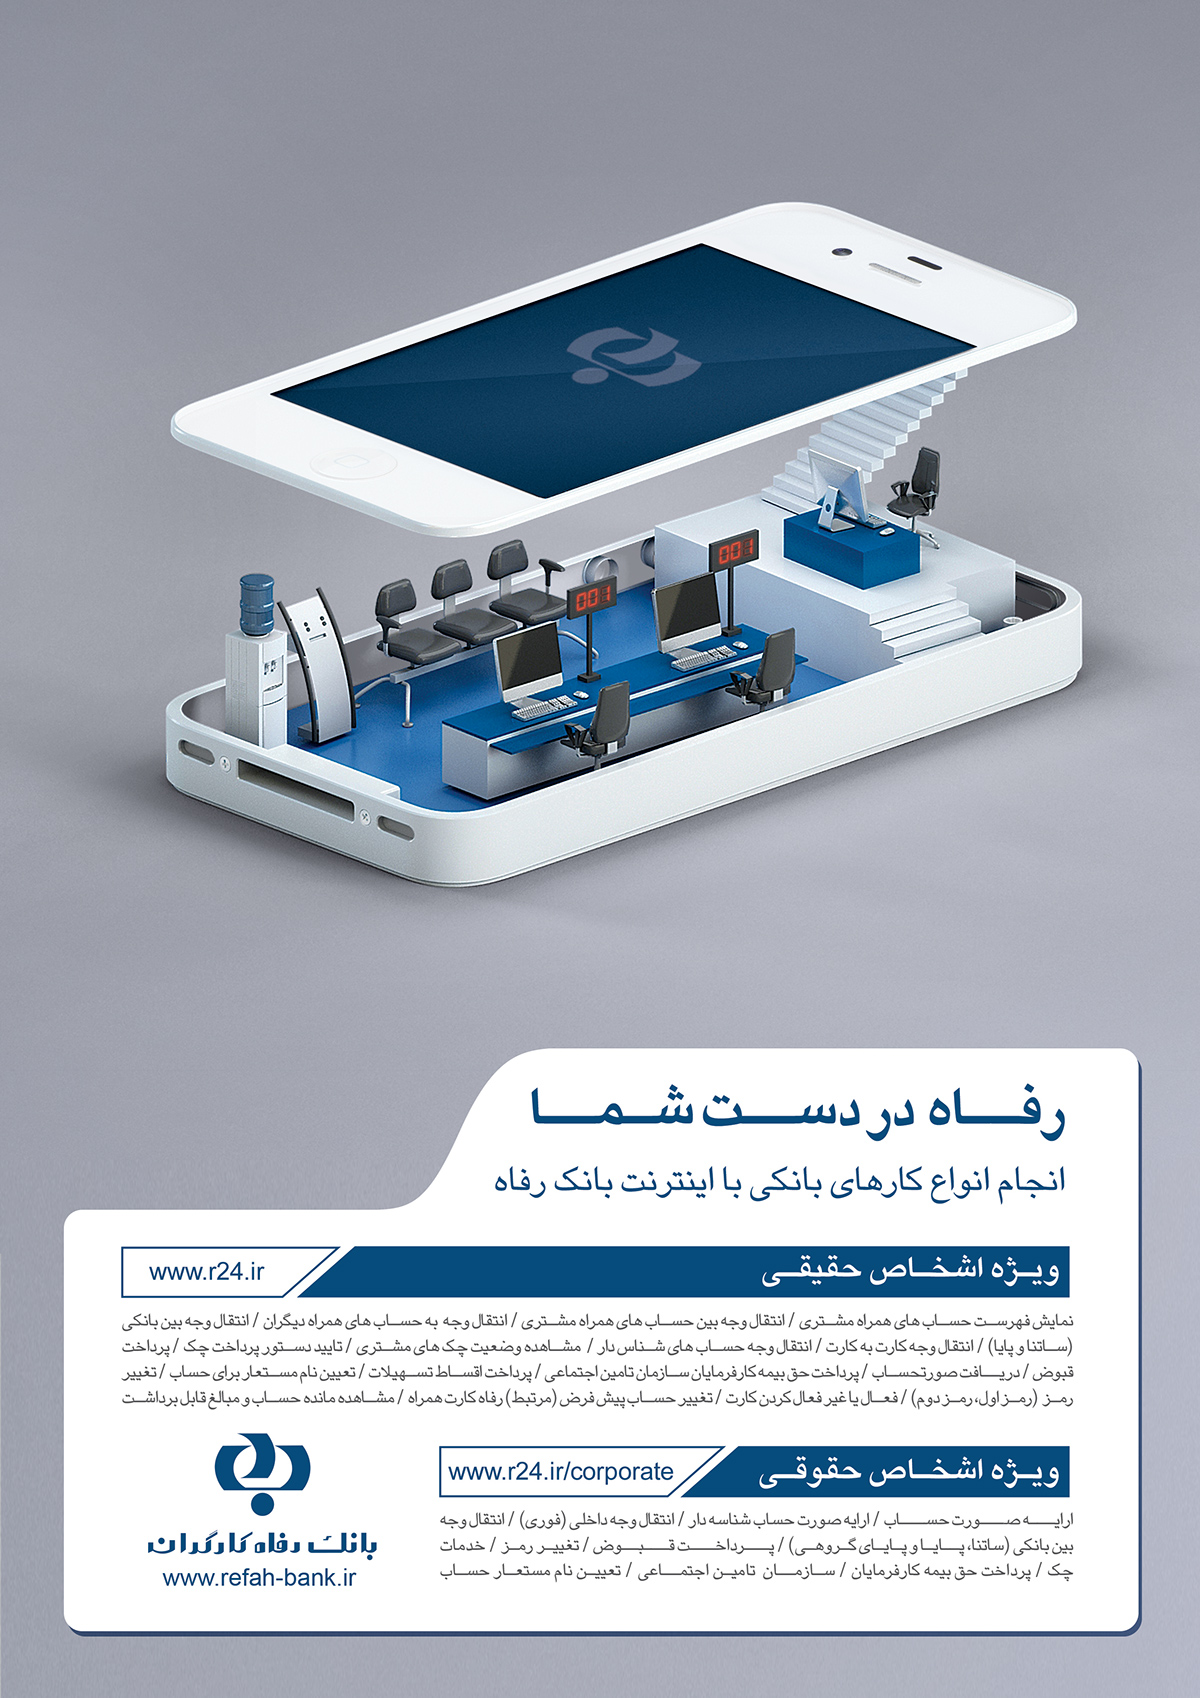 mobile Bank eBank branch cellphone application money refah Iran